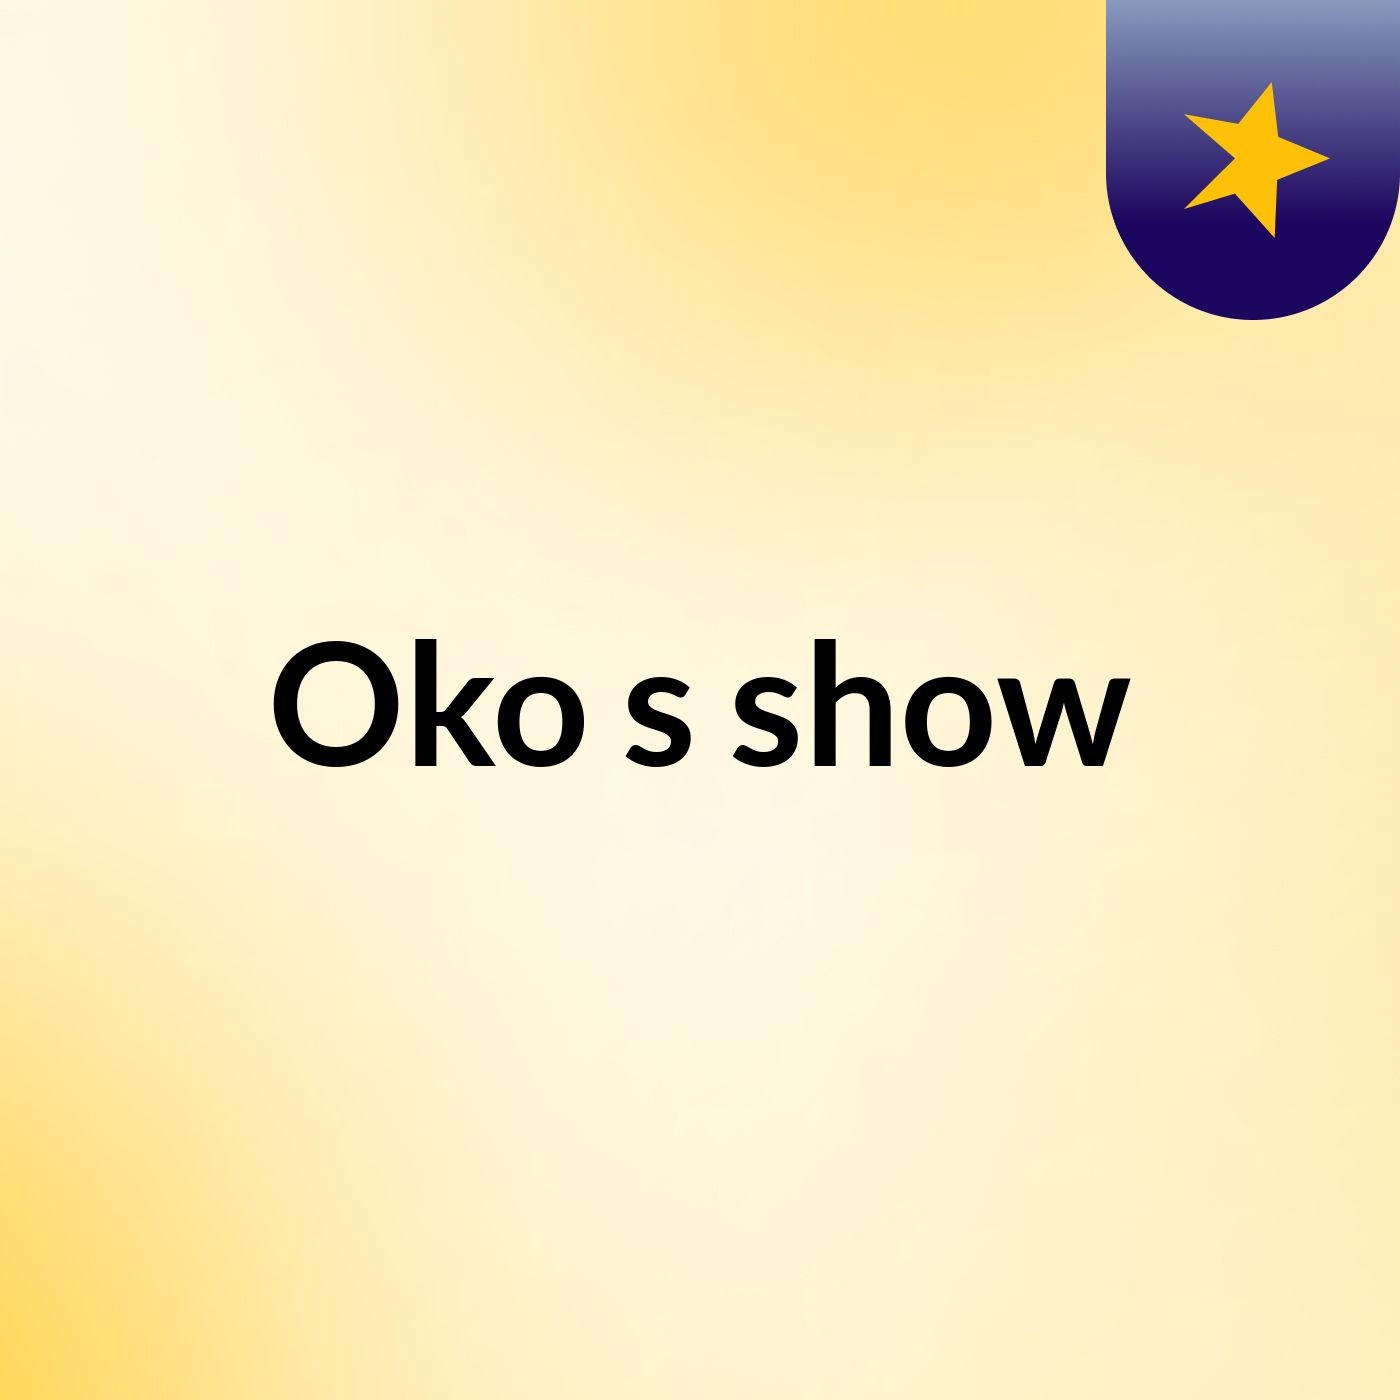 Oko's show